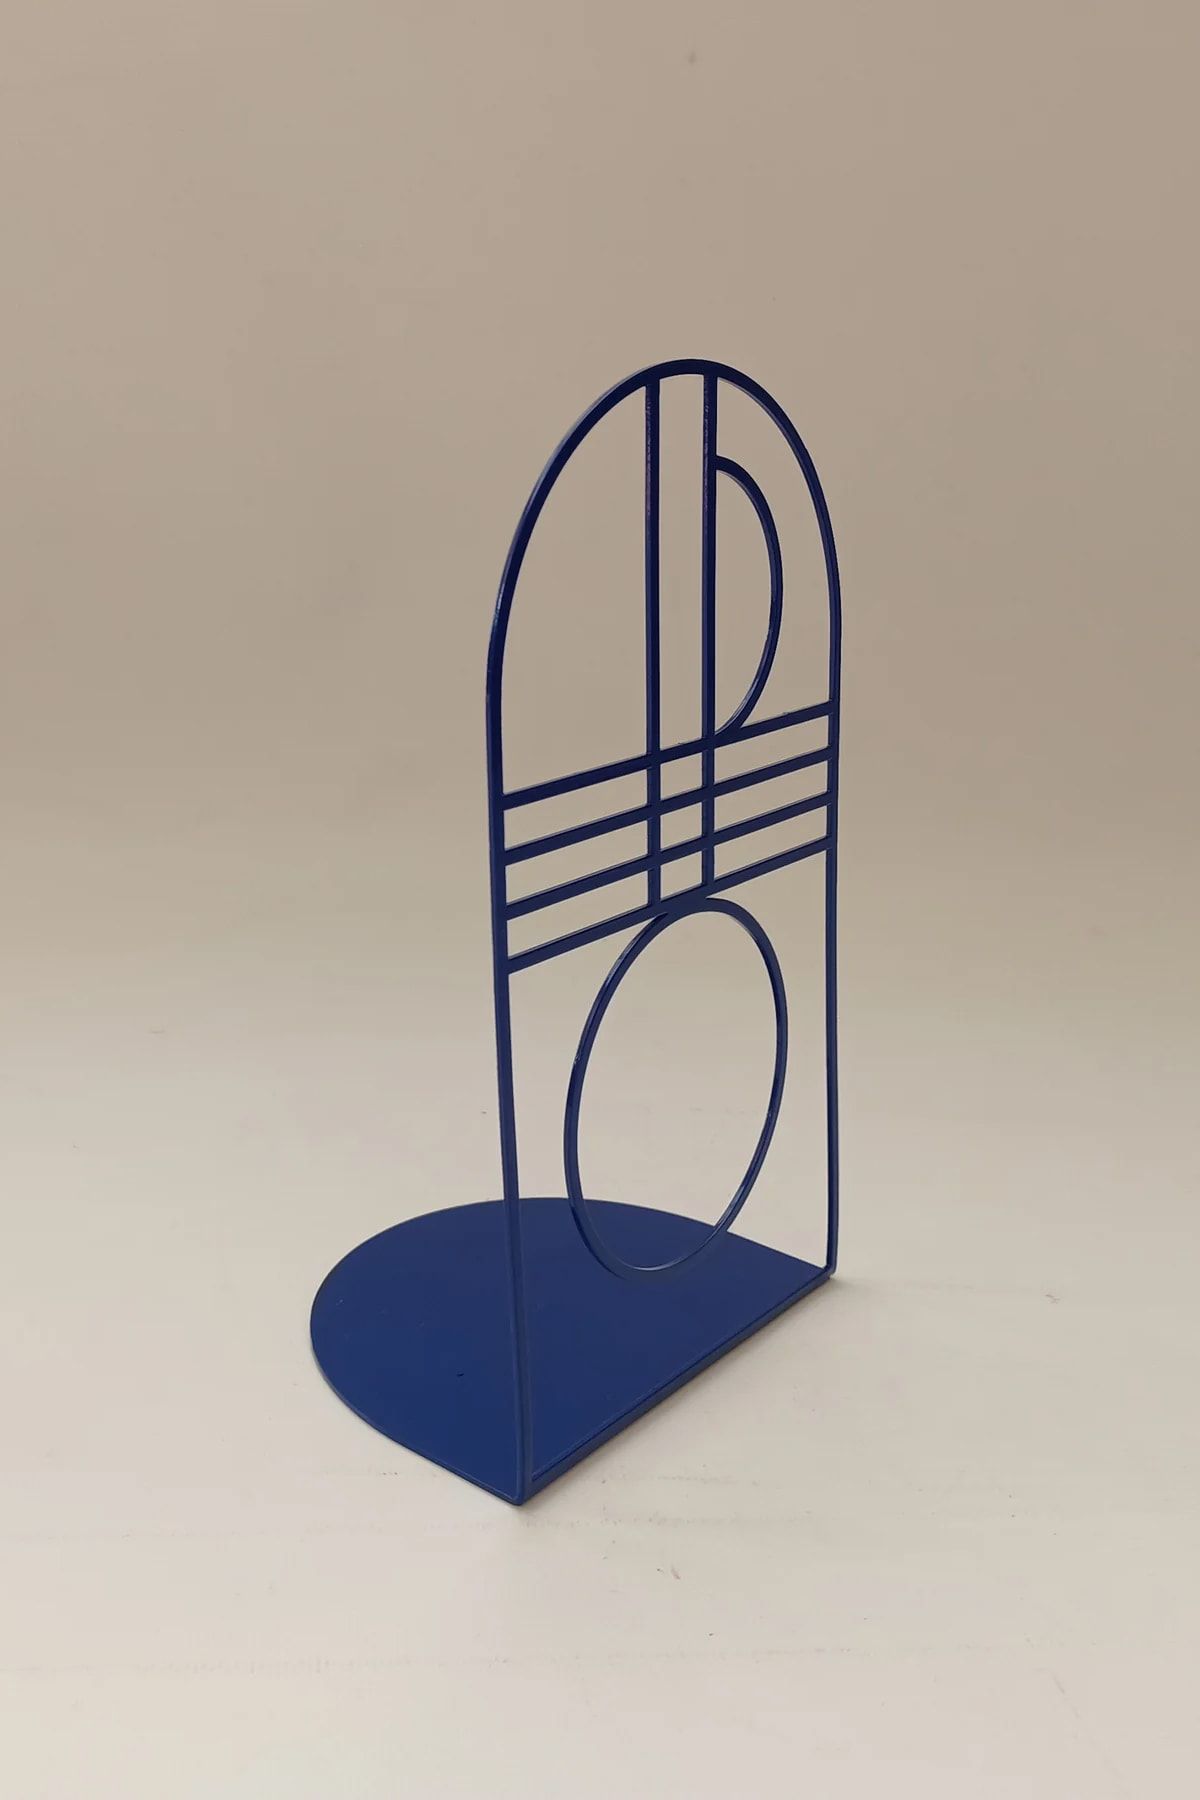 Rarart Concept Mavi Metal Kitap Tutucu - Kompakt Ve Şık Tasarım